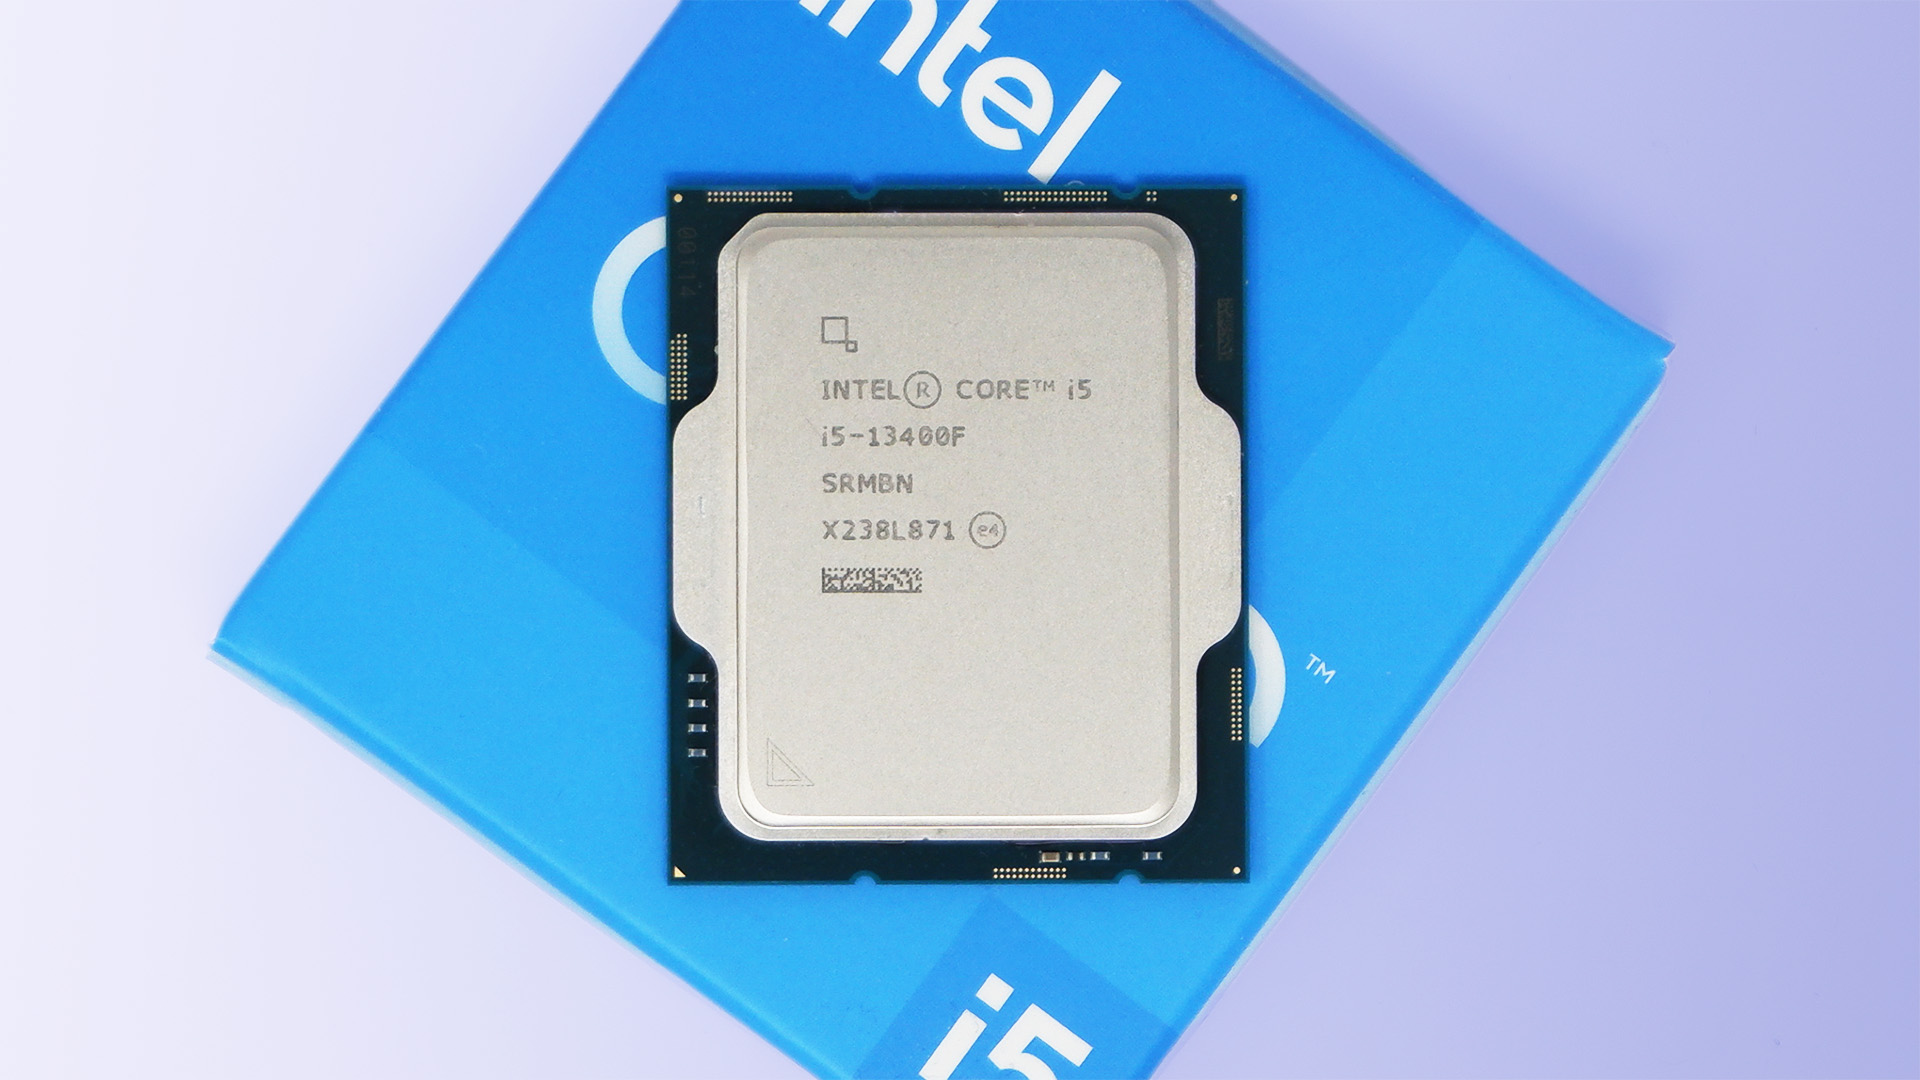 Intel Core i5 13400F CPU on an Intel box